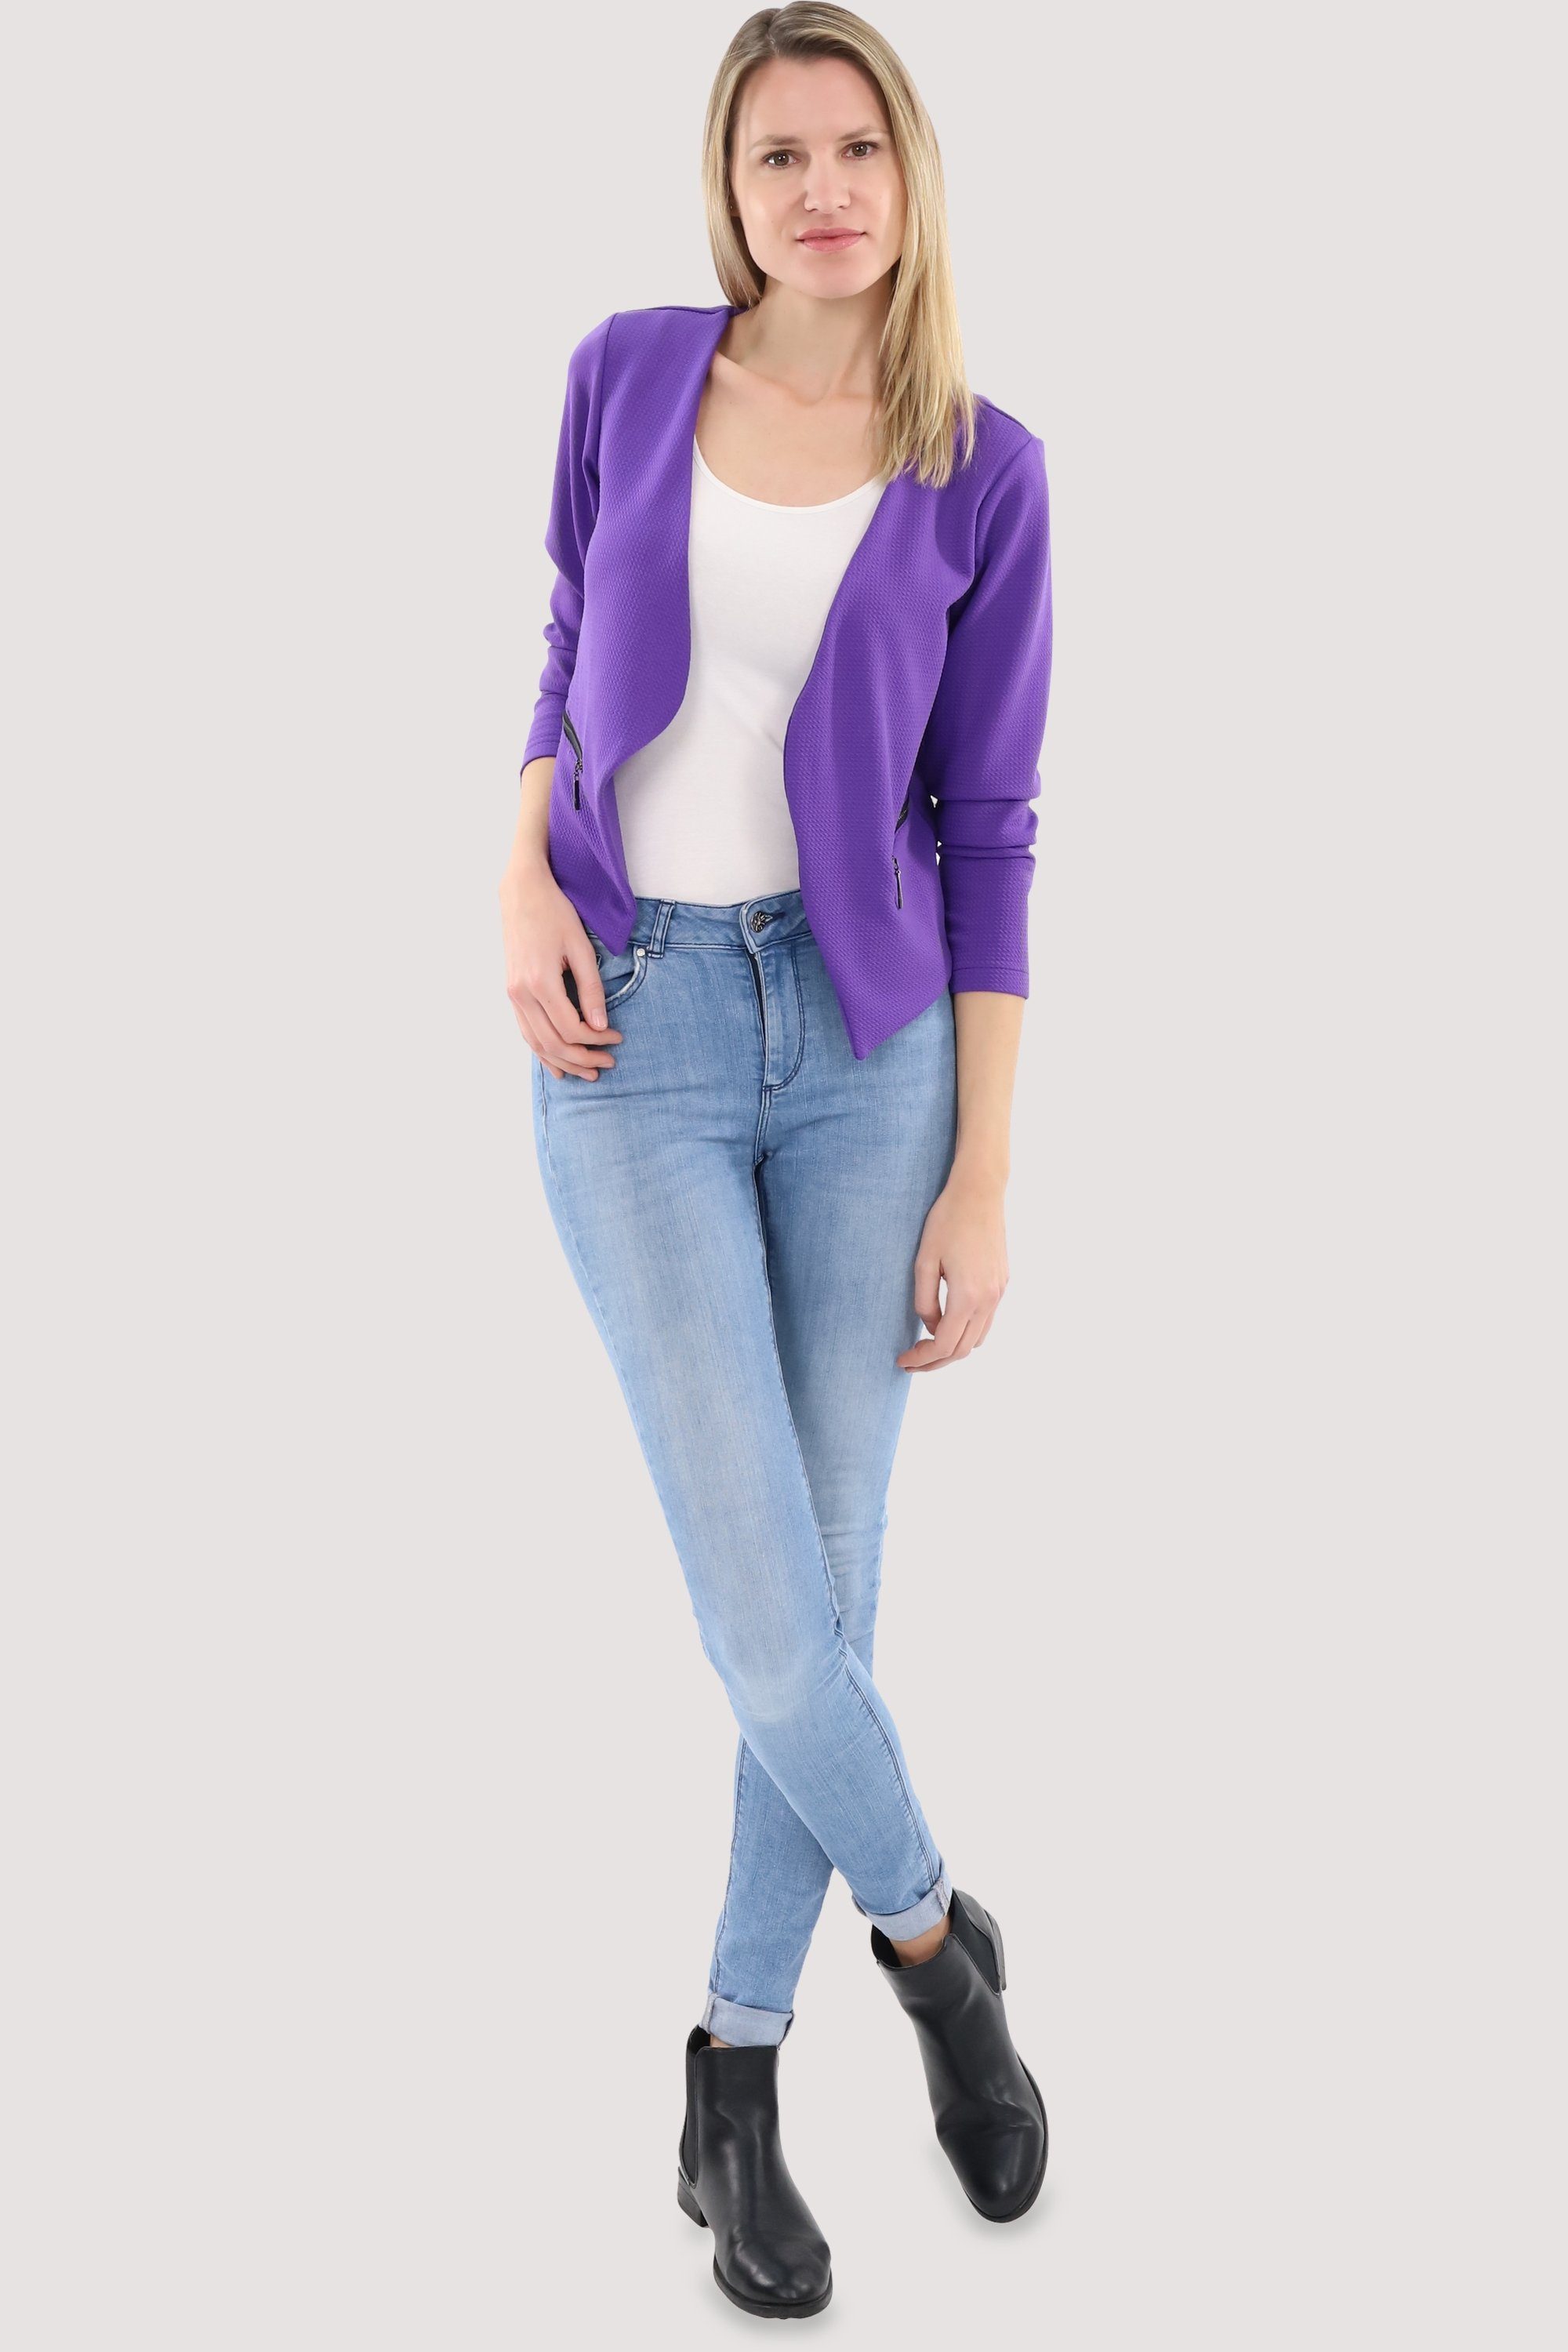 violett Jackenblazer malito than fashion Sweatblazer Basic-Look 6040 im more